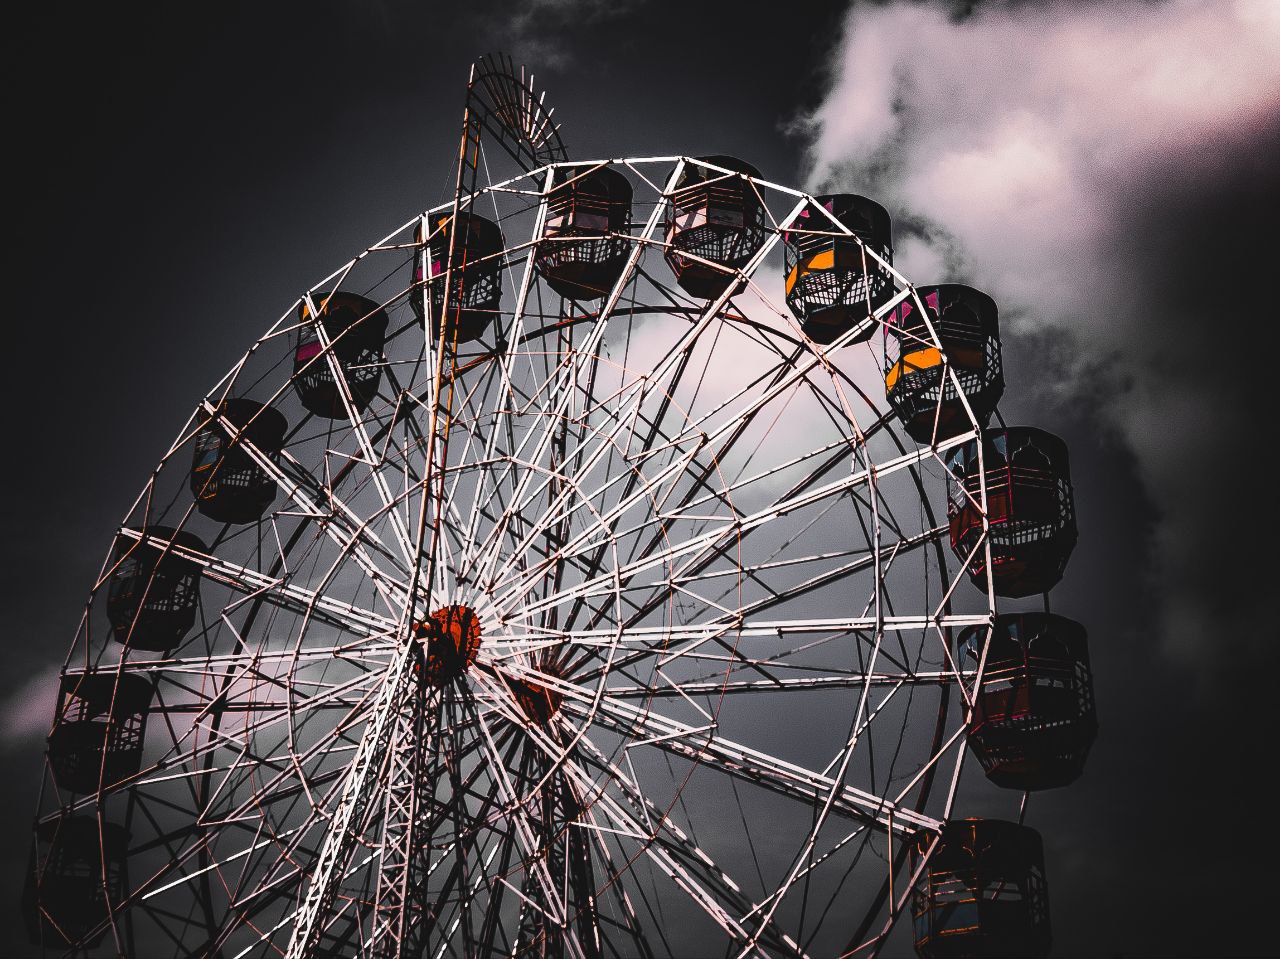 a ferris wheel with a cloudy sky